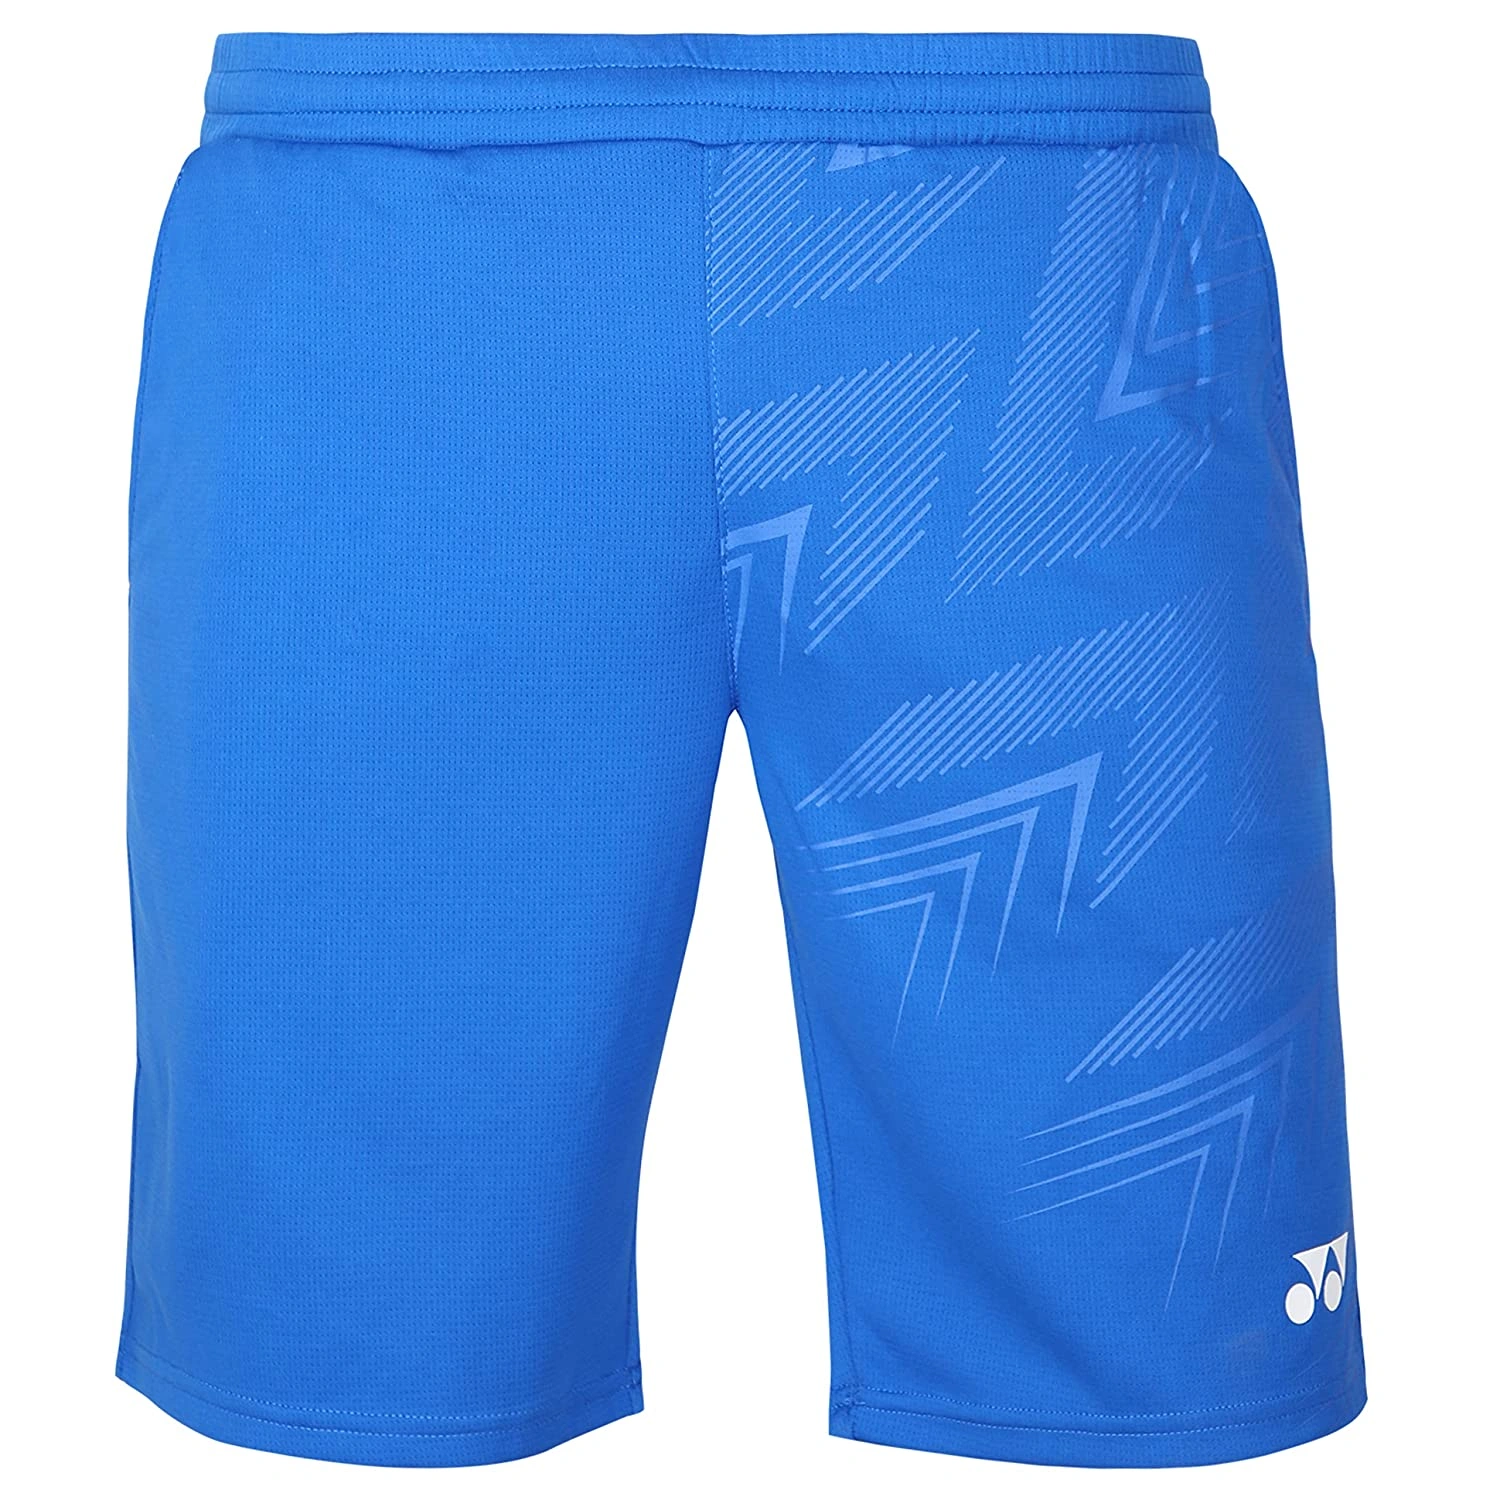 YONEX 2061 Senior Badminton/Tennis Shorts-NAUTICAL BLUE-M-1